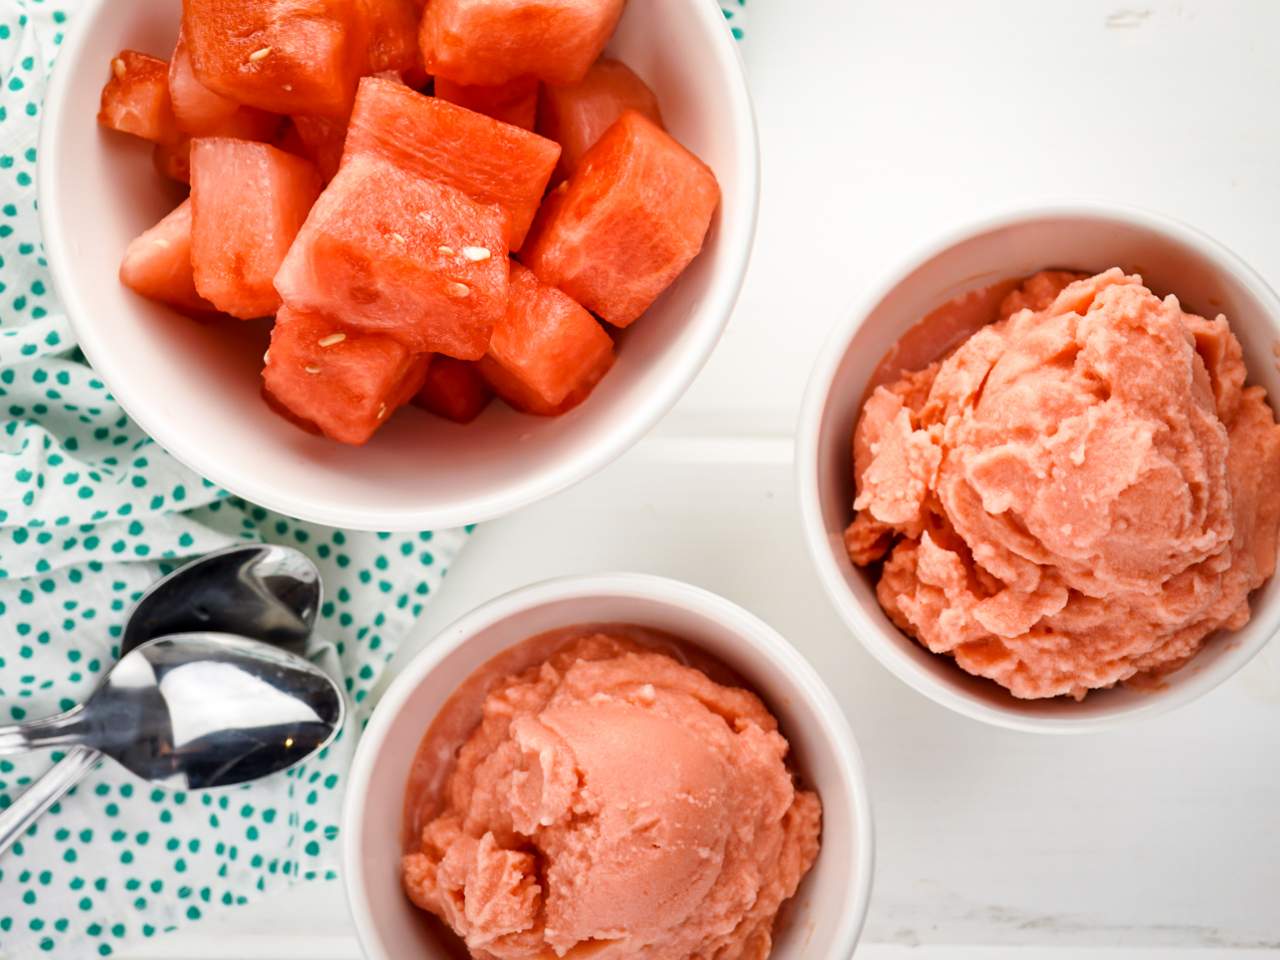 Watermelon: Ice Cream Preparation And Health Benefits